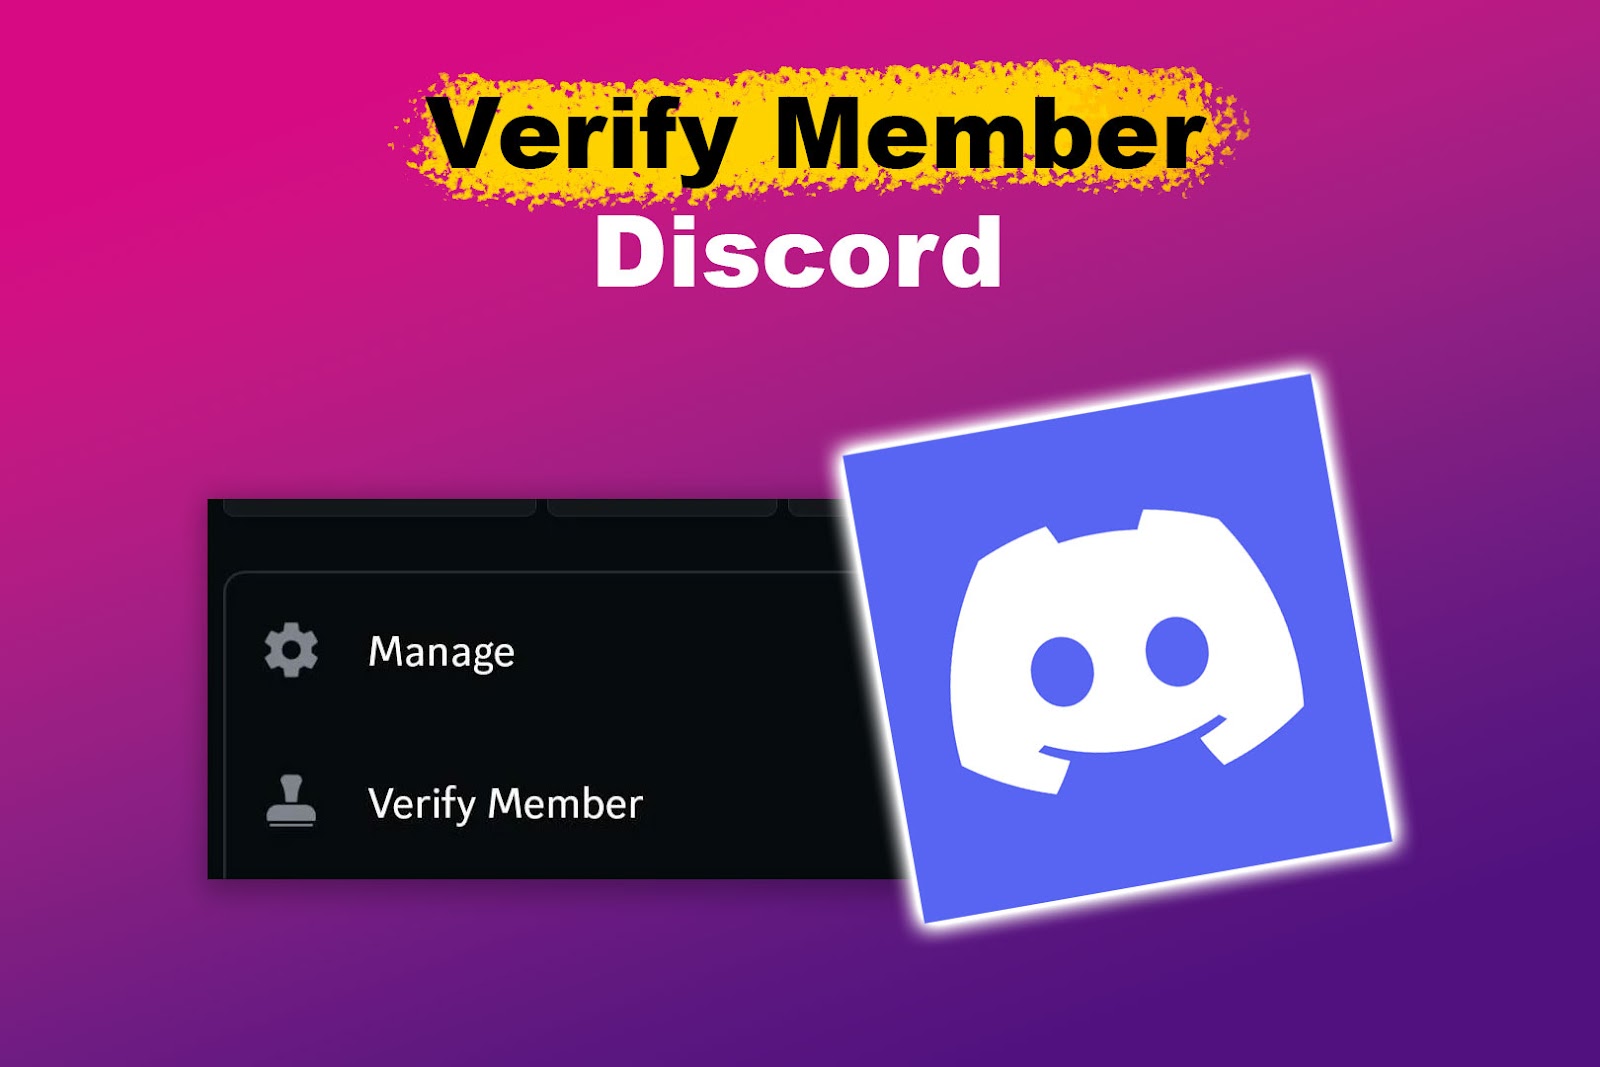 Verify Member Discord